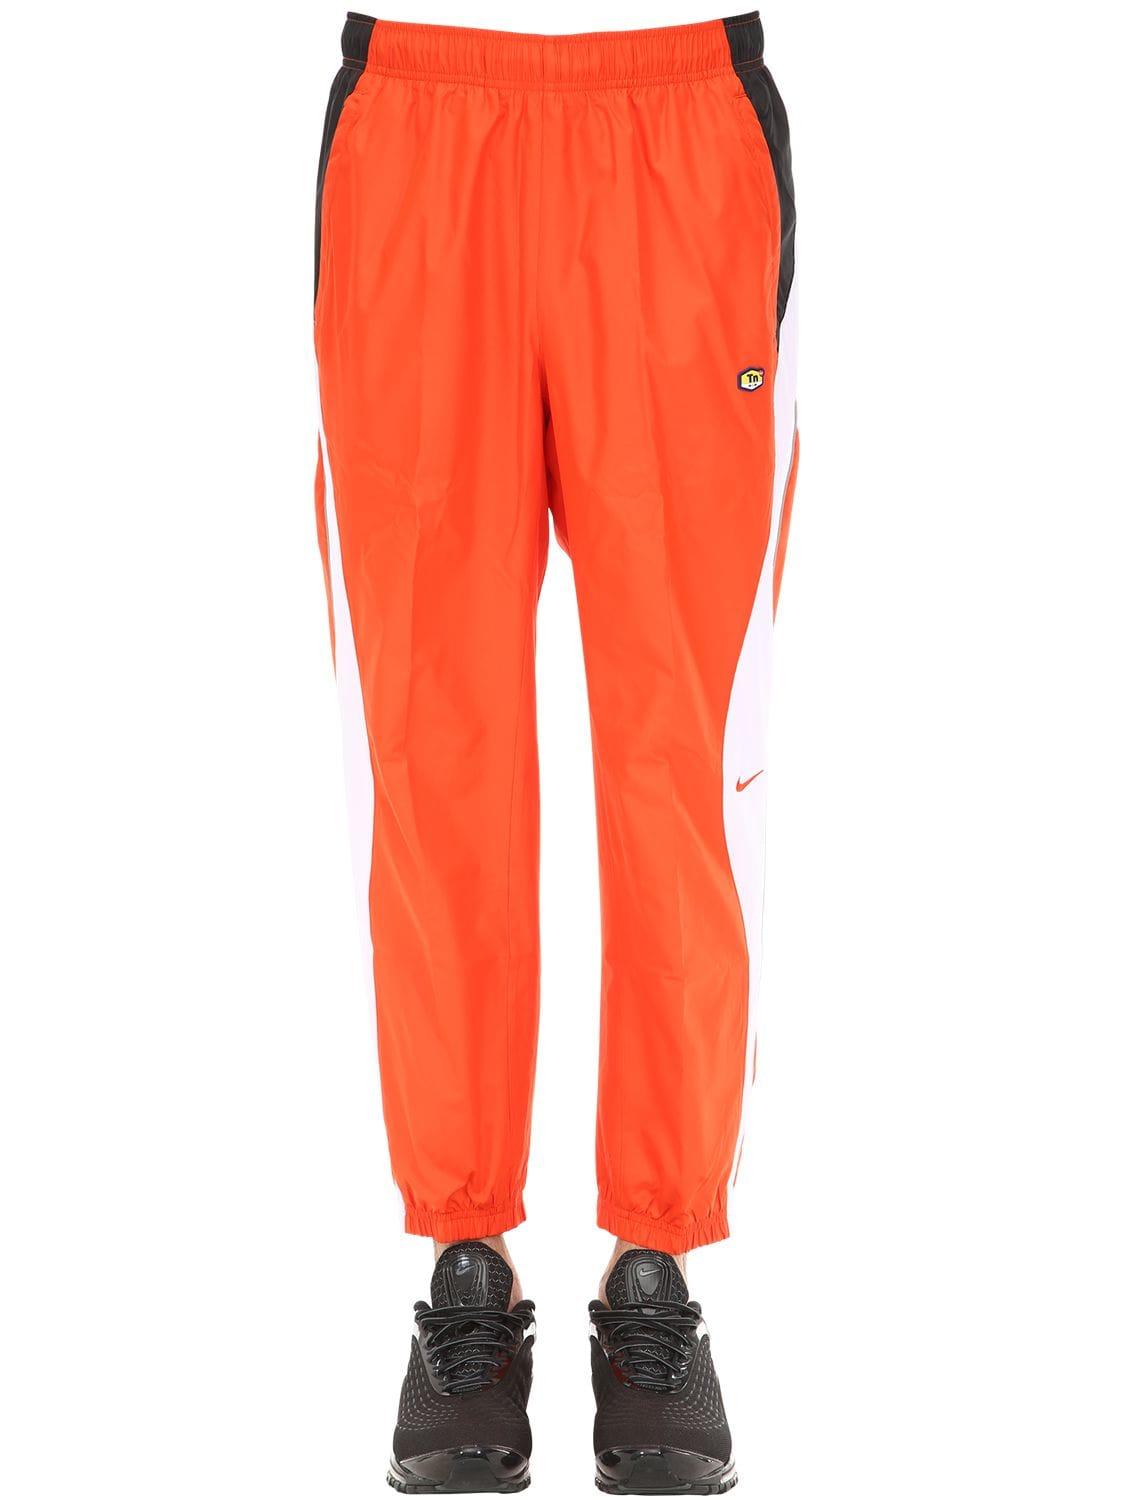 Nike Synthetic M Nrg Tn Nylon Track Pants in Orange for Men - Lyst